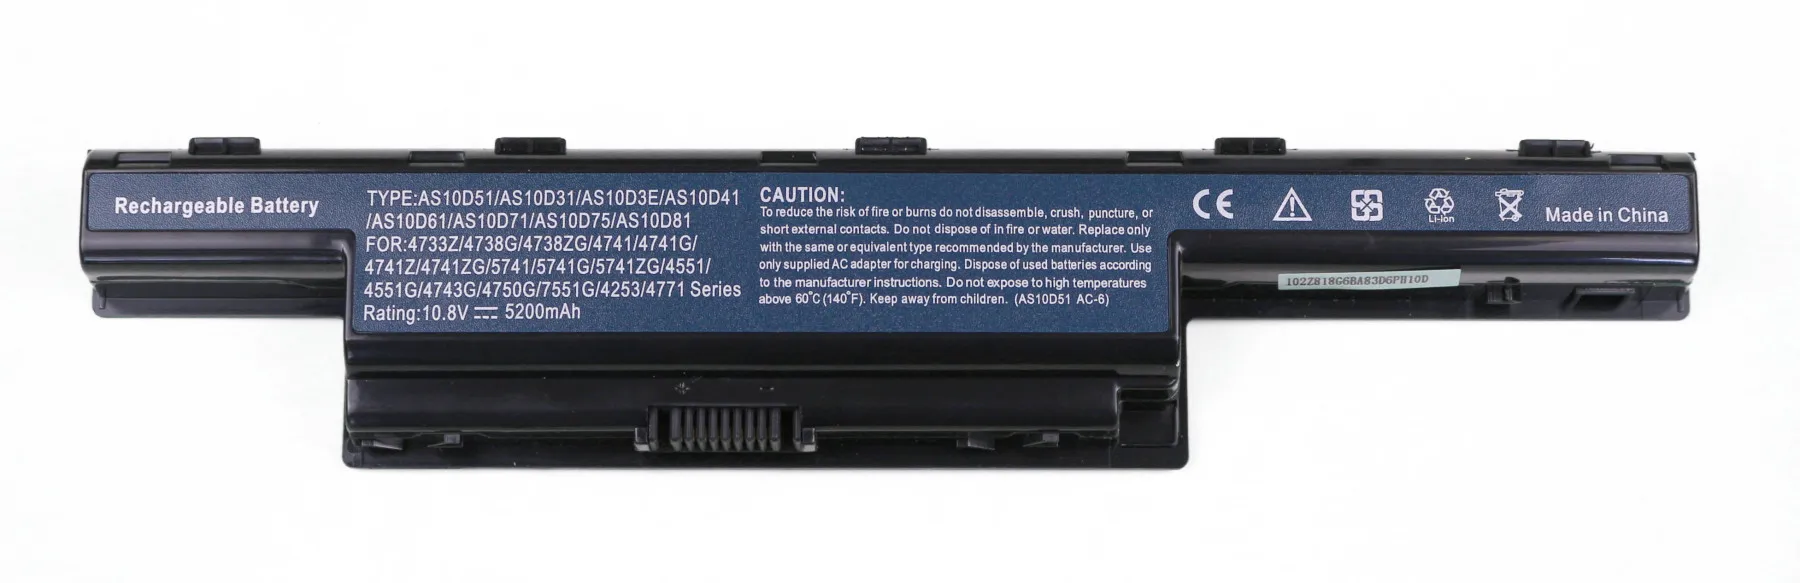 Аккумулятор для ноутбука Acer Aspire V3 551G (батарея)|Аккумуляторы ноутбуков| |